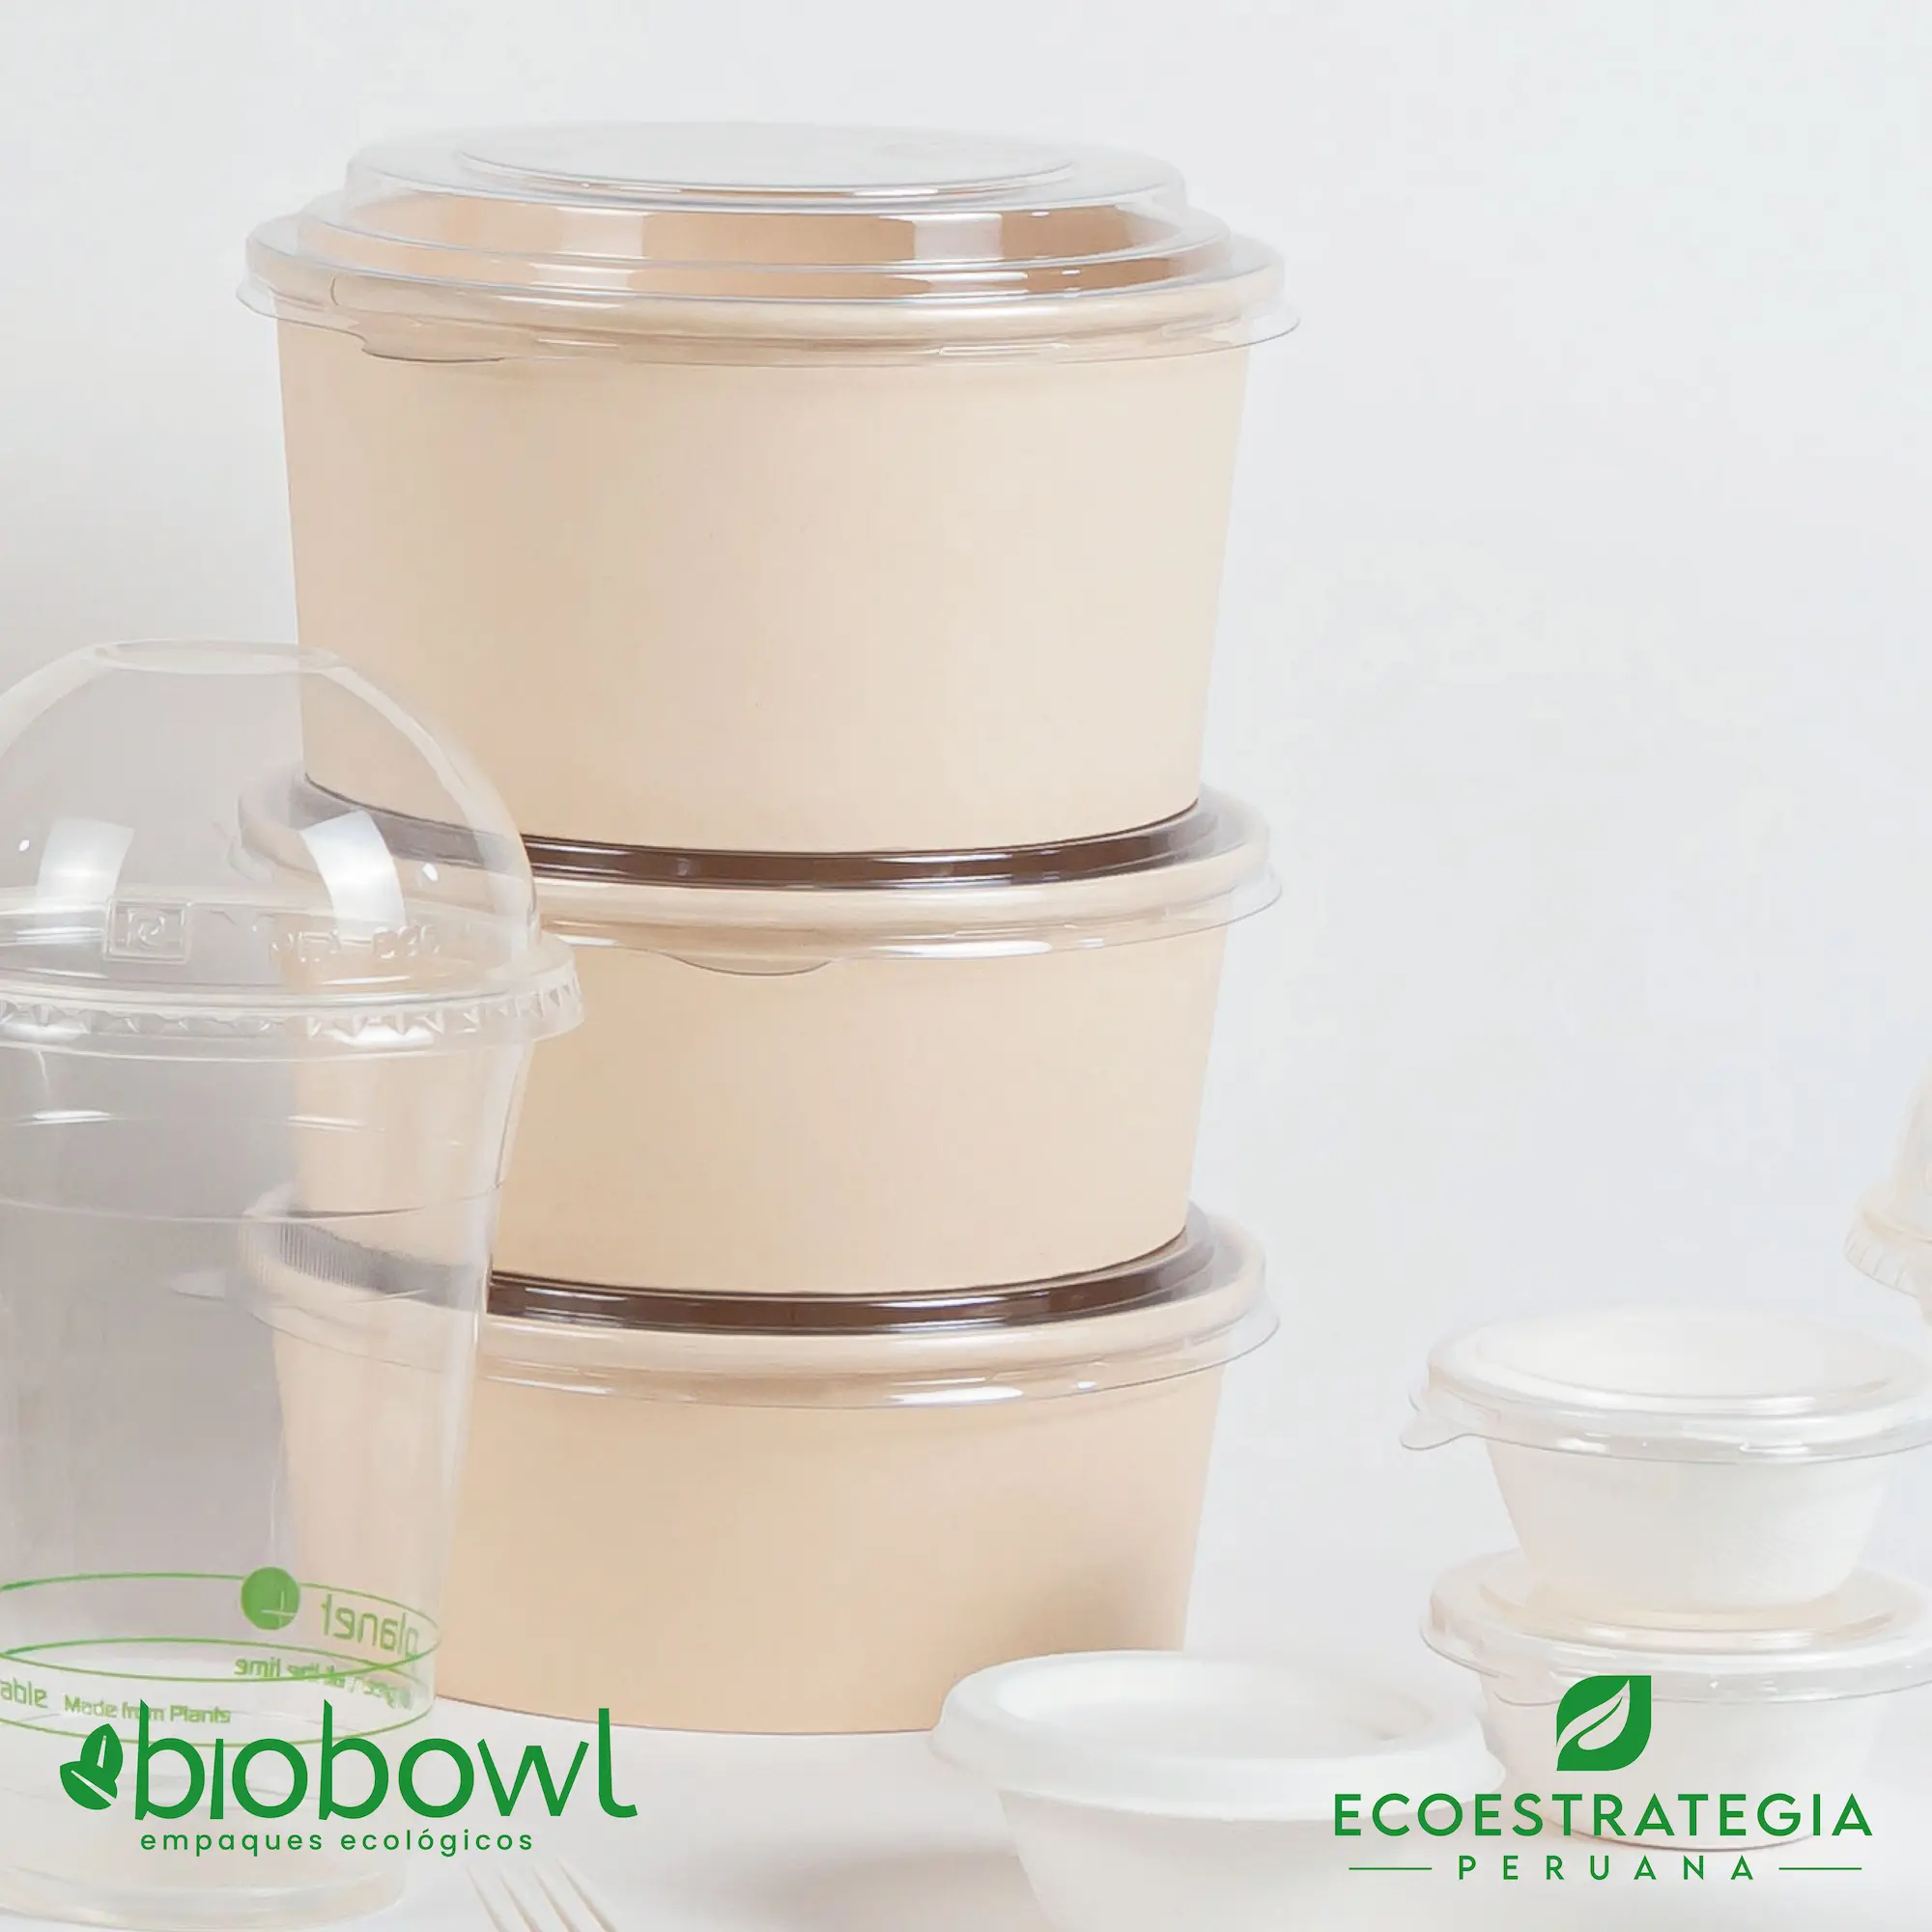 Este bowl biodegradable de 750 ml es a base de fibra de bambu. Envases descartables con gramaje ideal, cotiza tus empaques, platos y tapers para ensalada